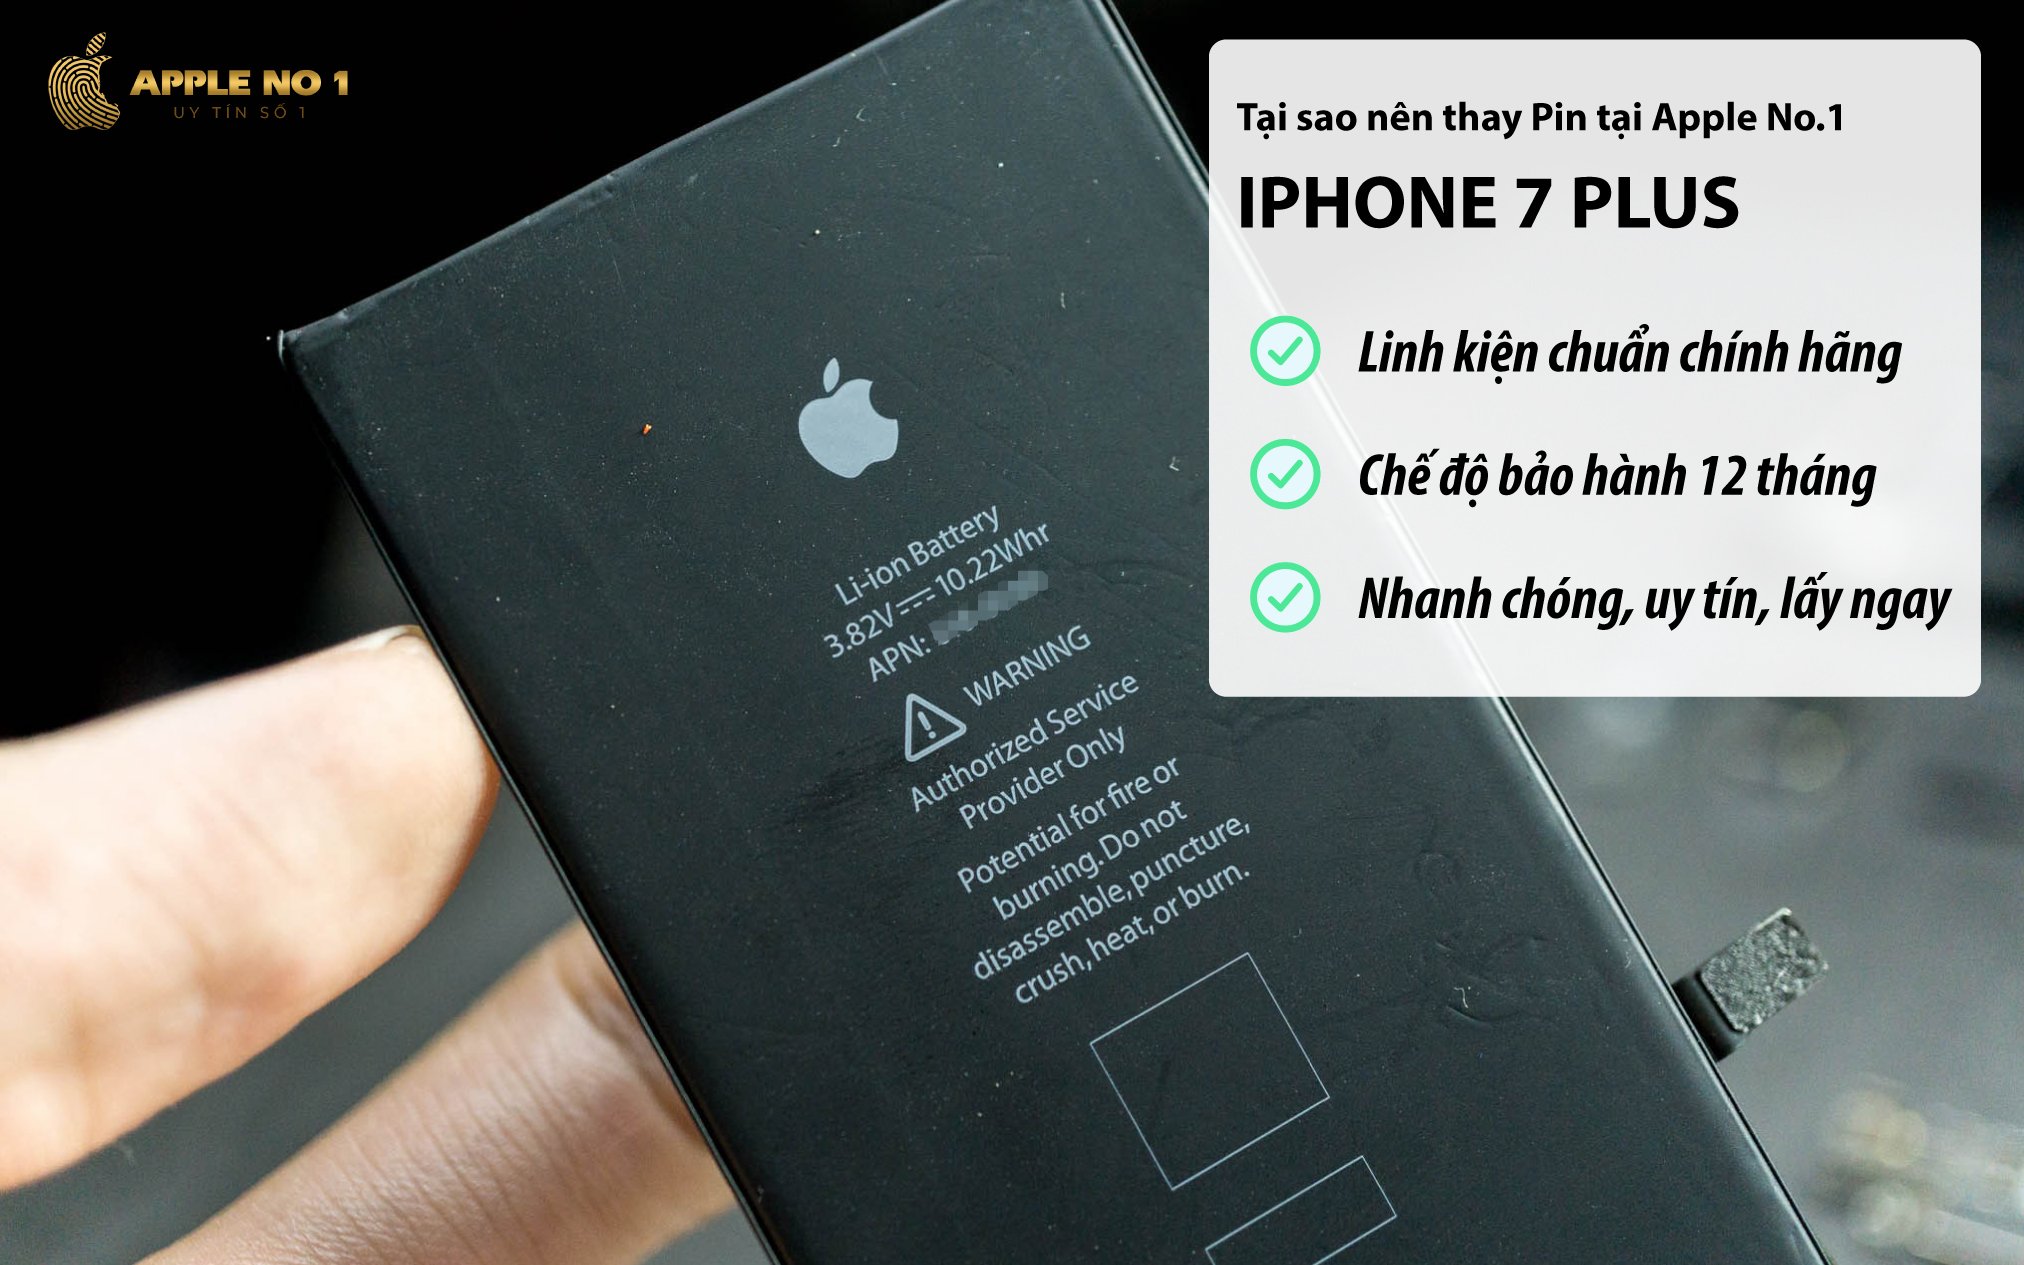 Thay pin iPhone 7 Plus tại Apple No.1